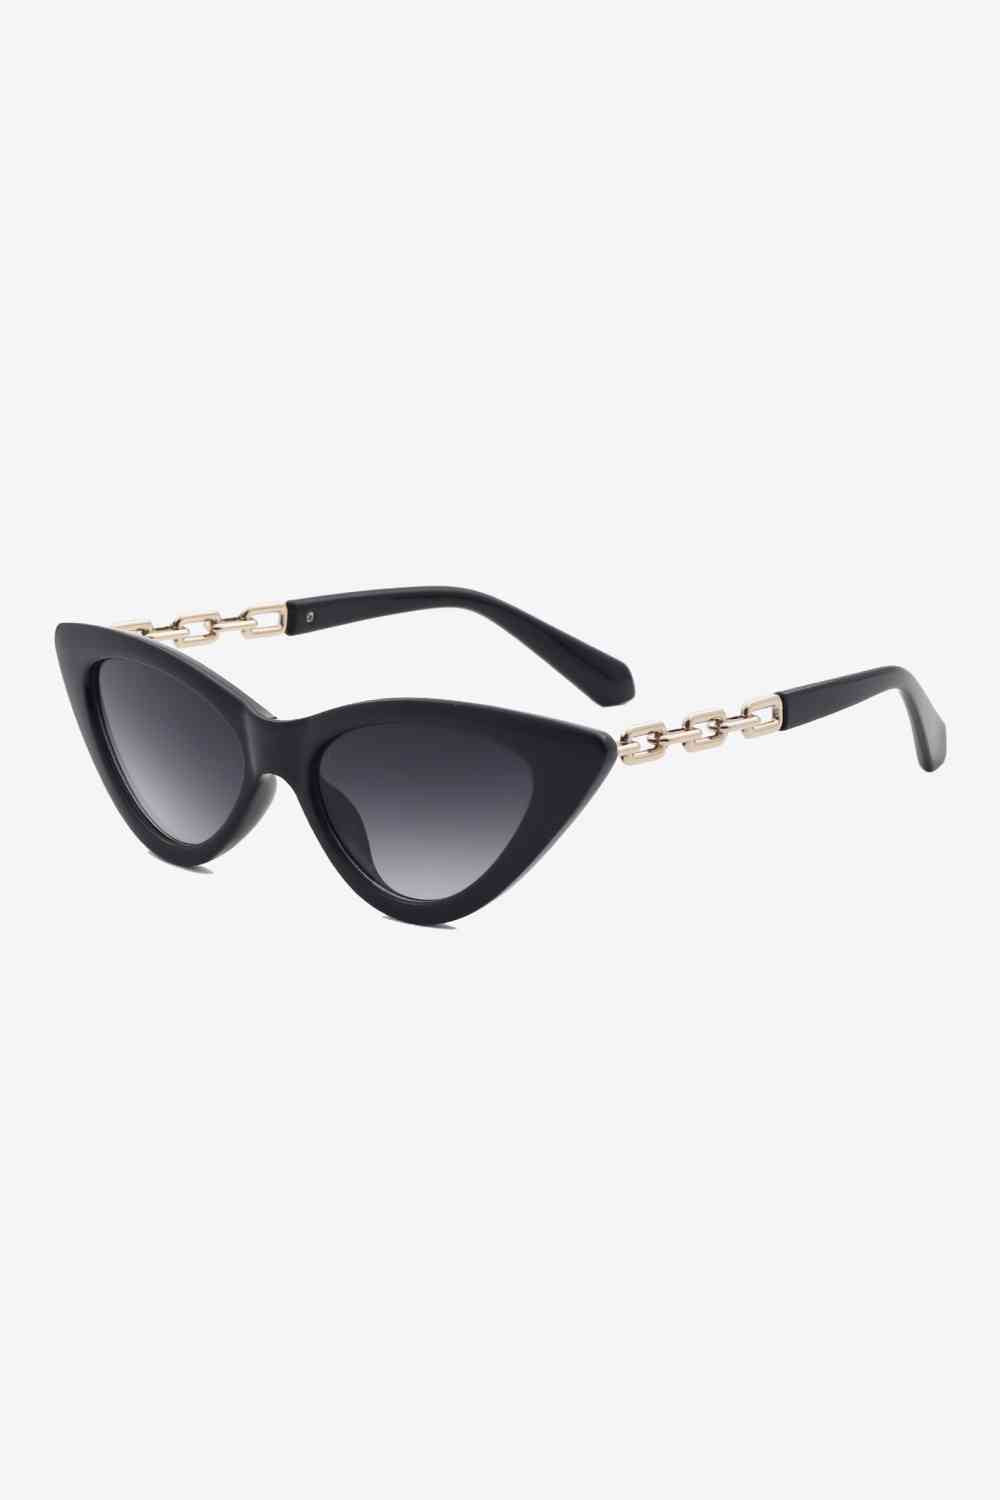 prada cat eye sunglasses	